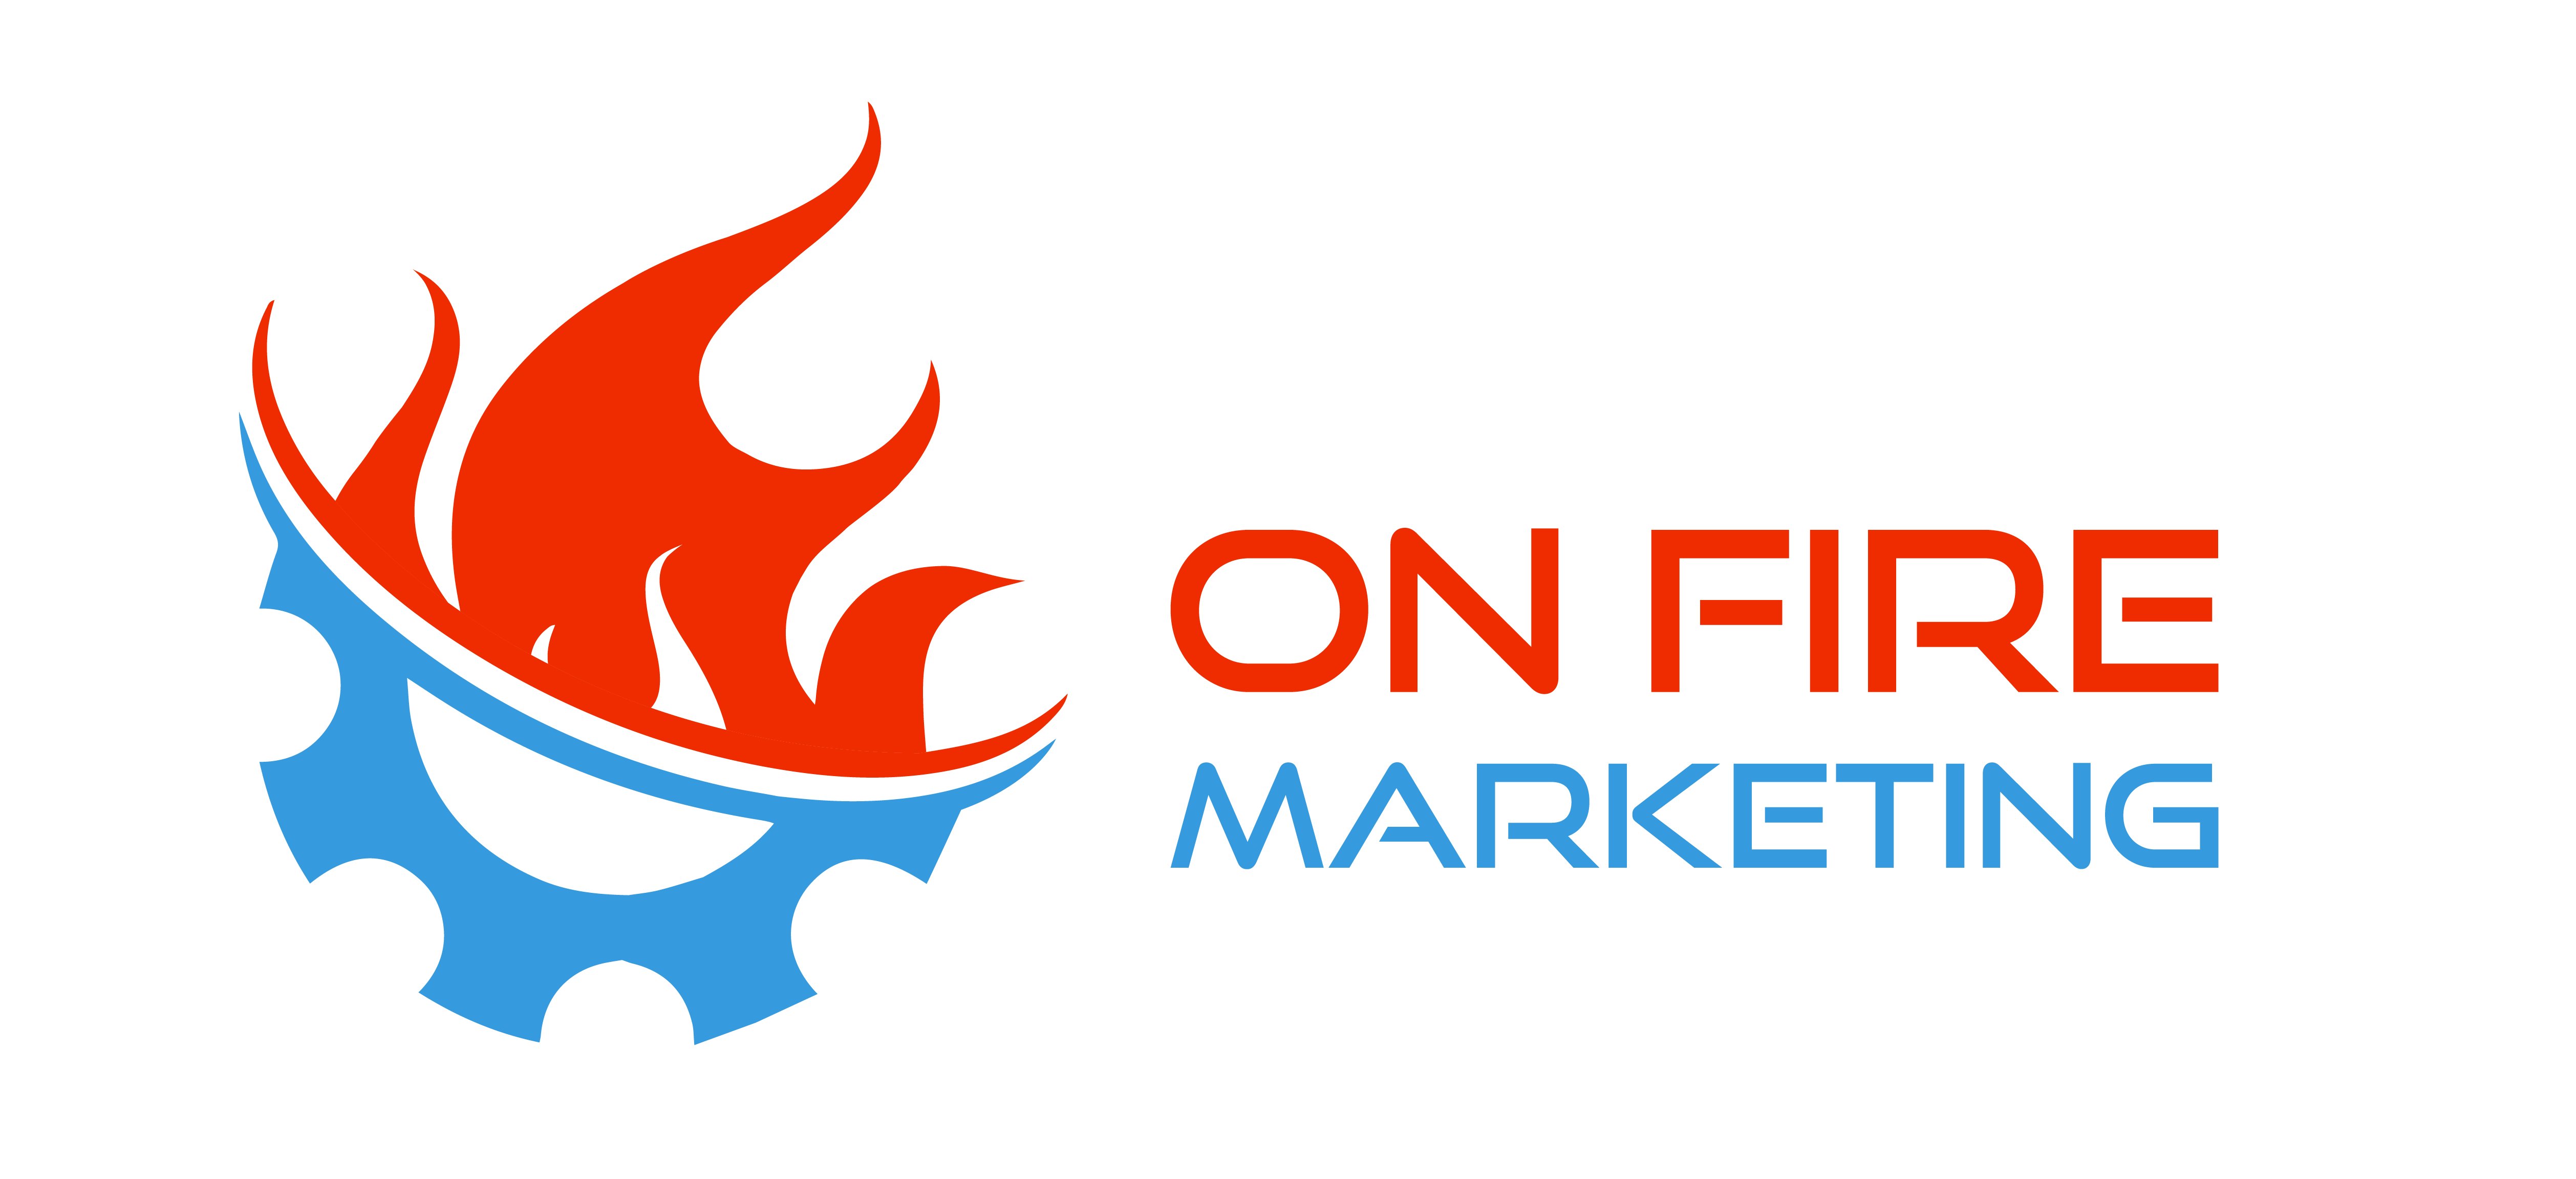 On Fire Marketing